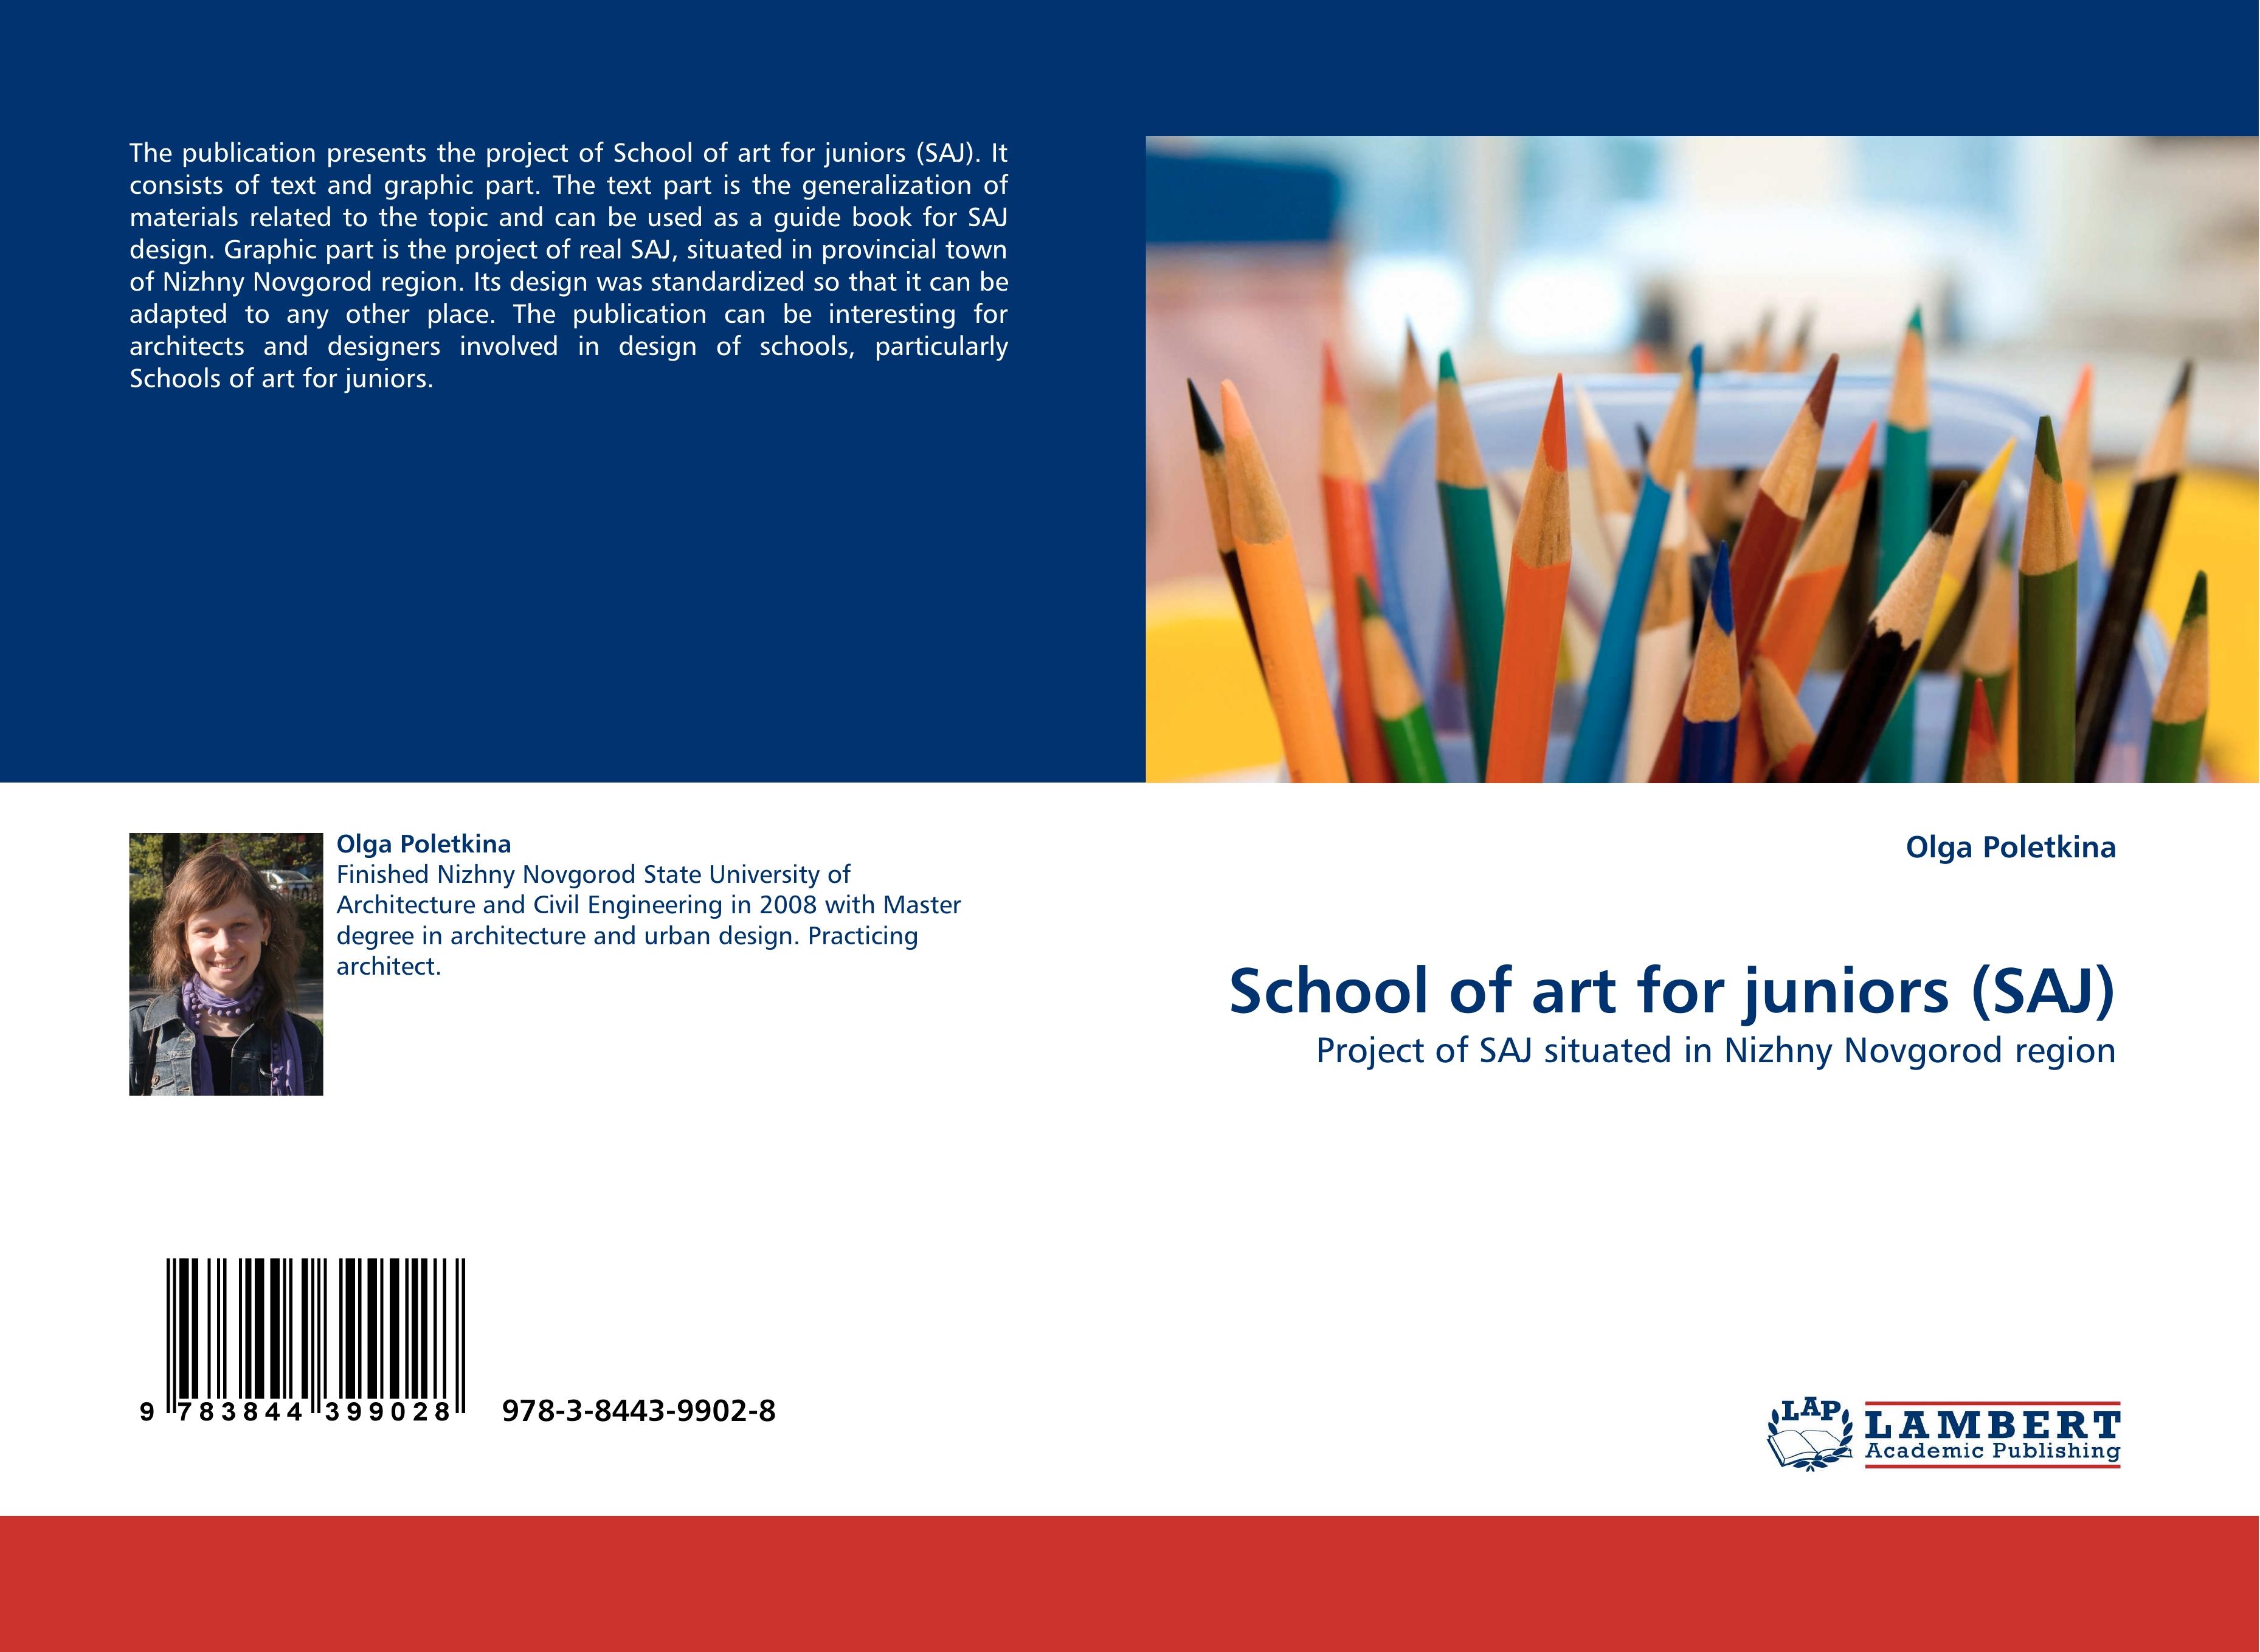 School of art for juniors (SAJ) - Olga Poletkina